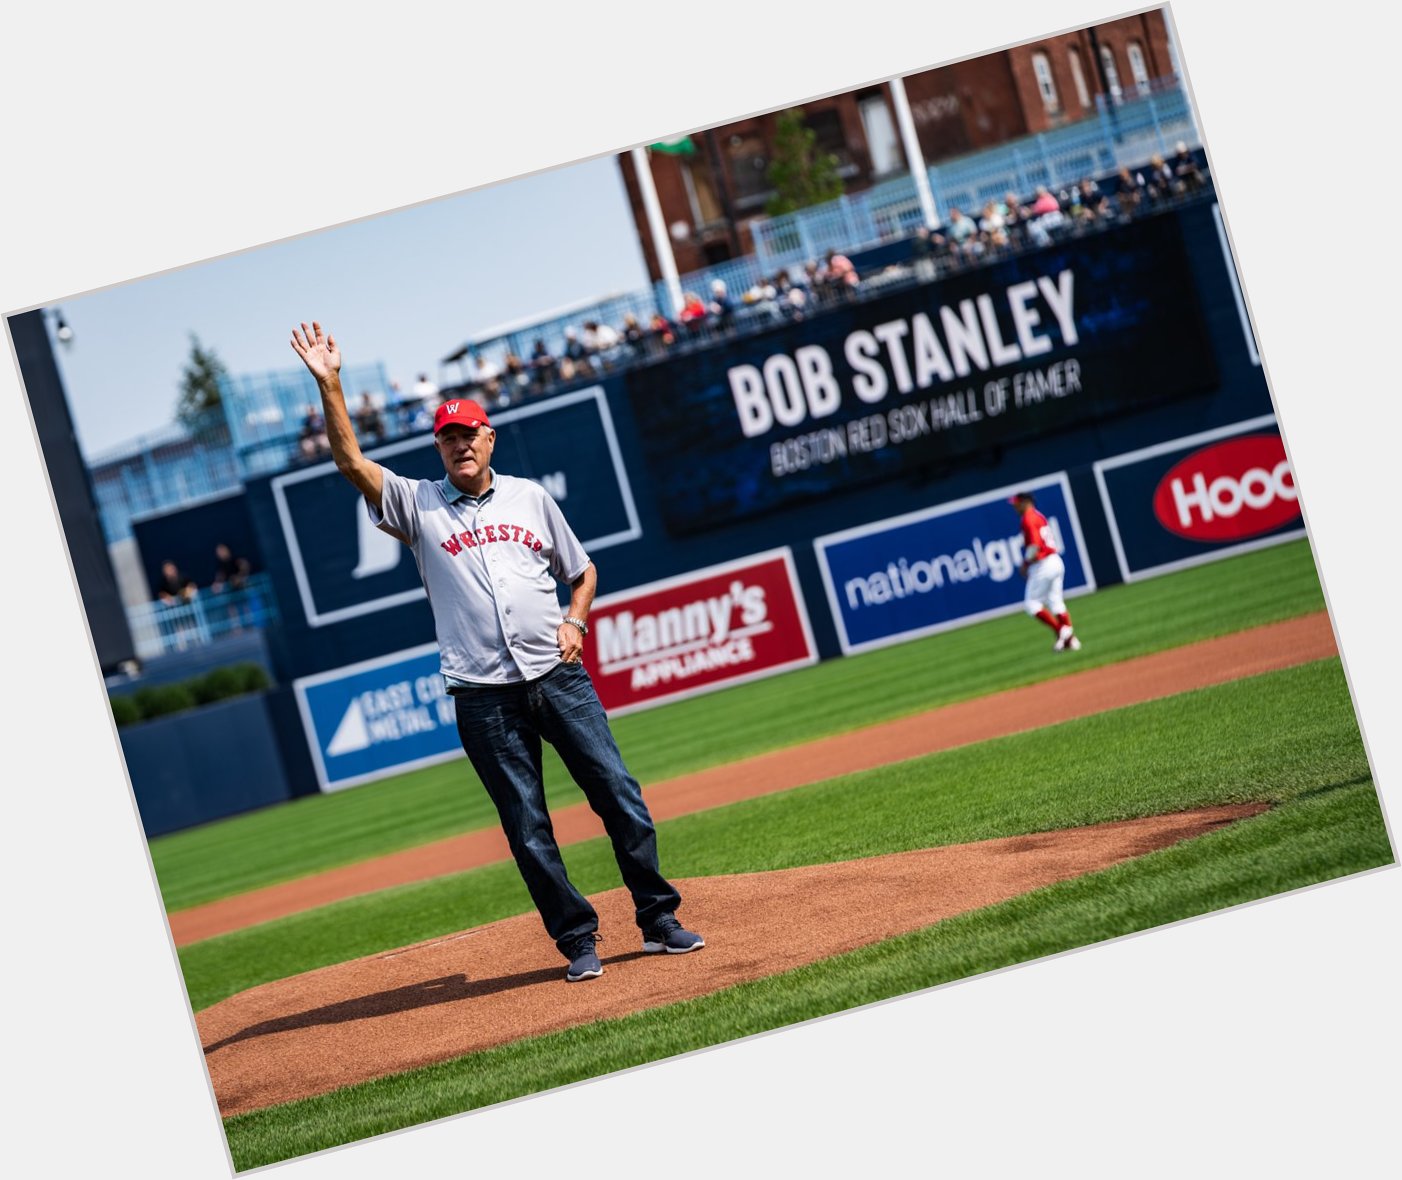 Happy Birthday to Red Sox Hall of Famer, Bob Stanley! 